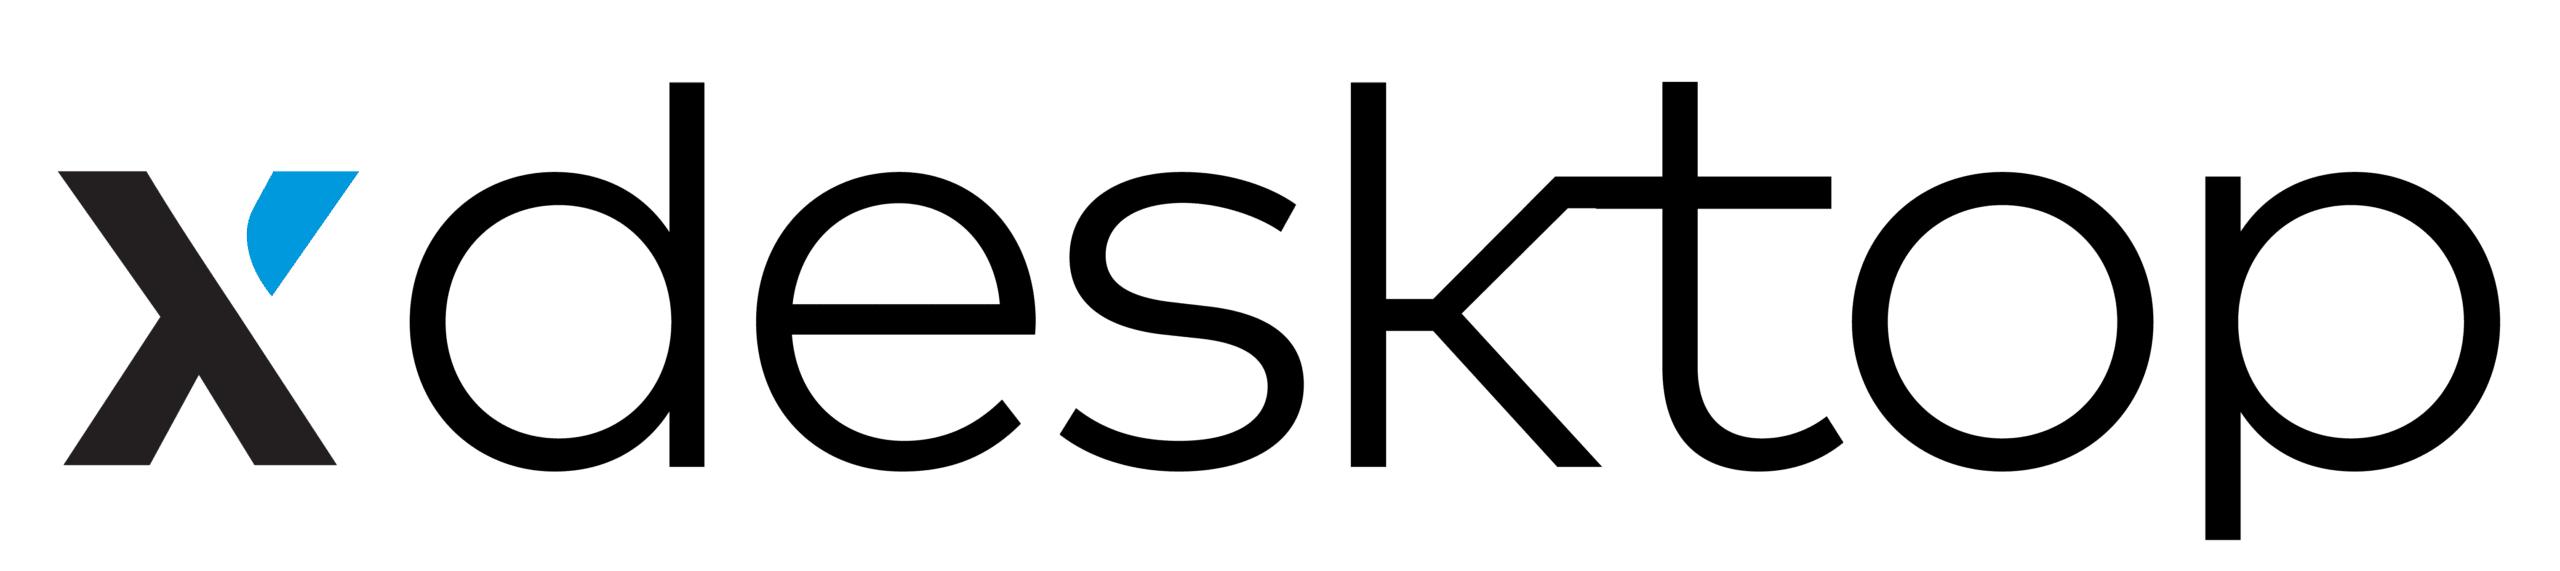 Zaxe xDesktop Logo - Black